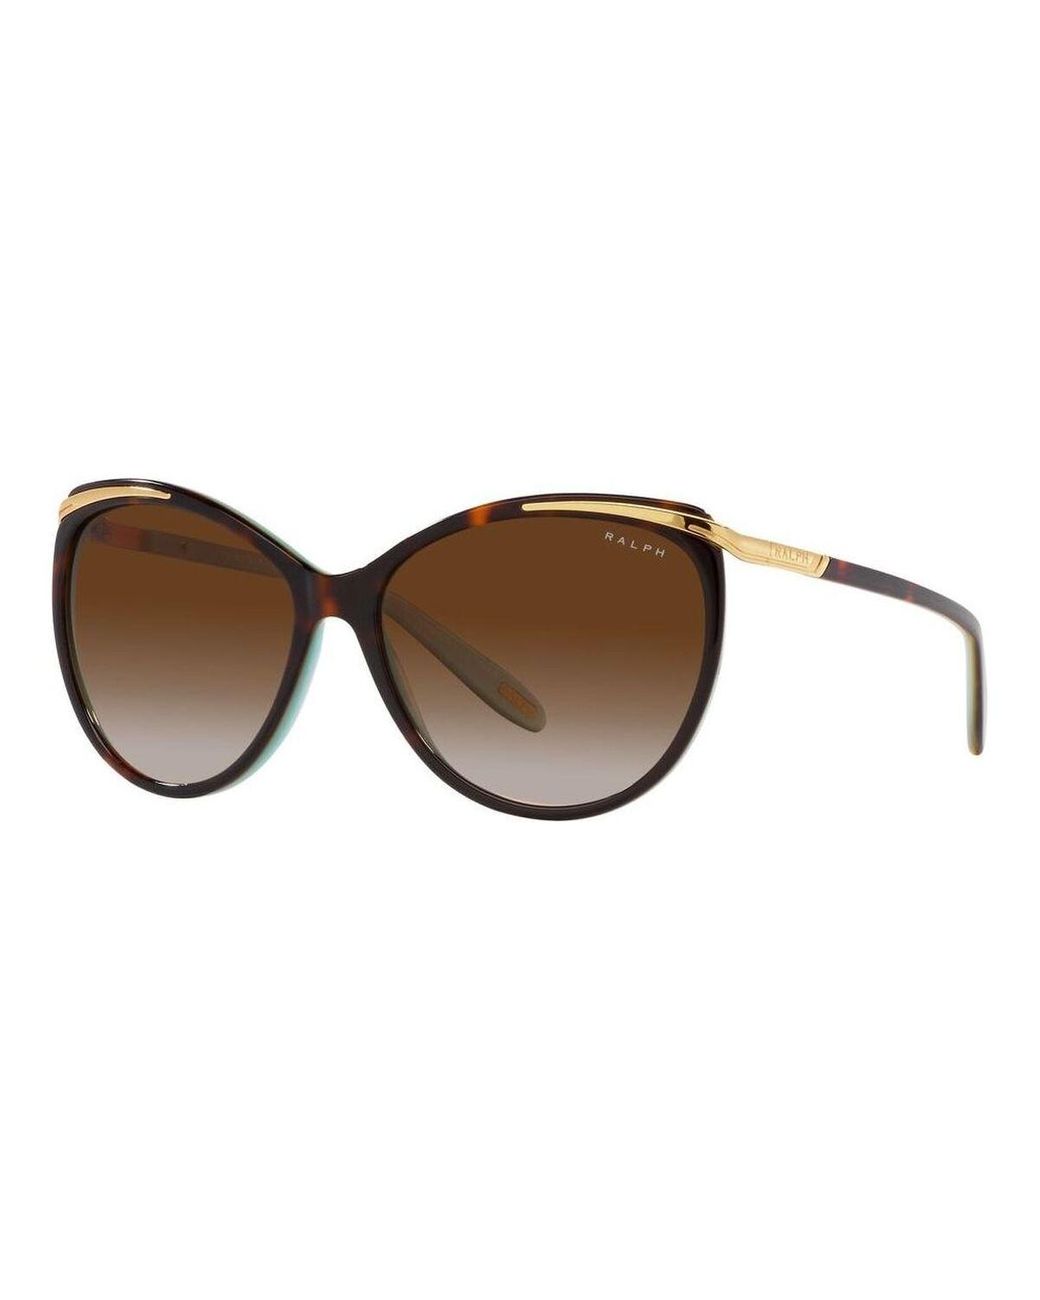 Ralph Lauren Ladies' Sunglasses Ra 5150 in Brown | Lyst